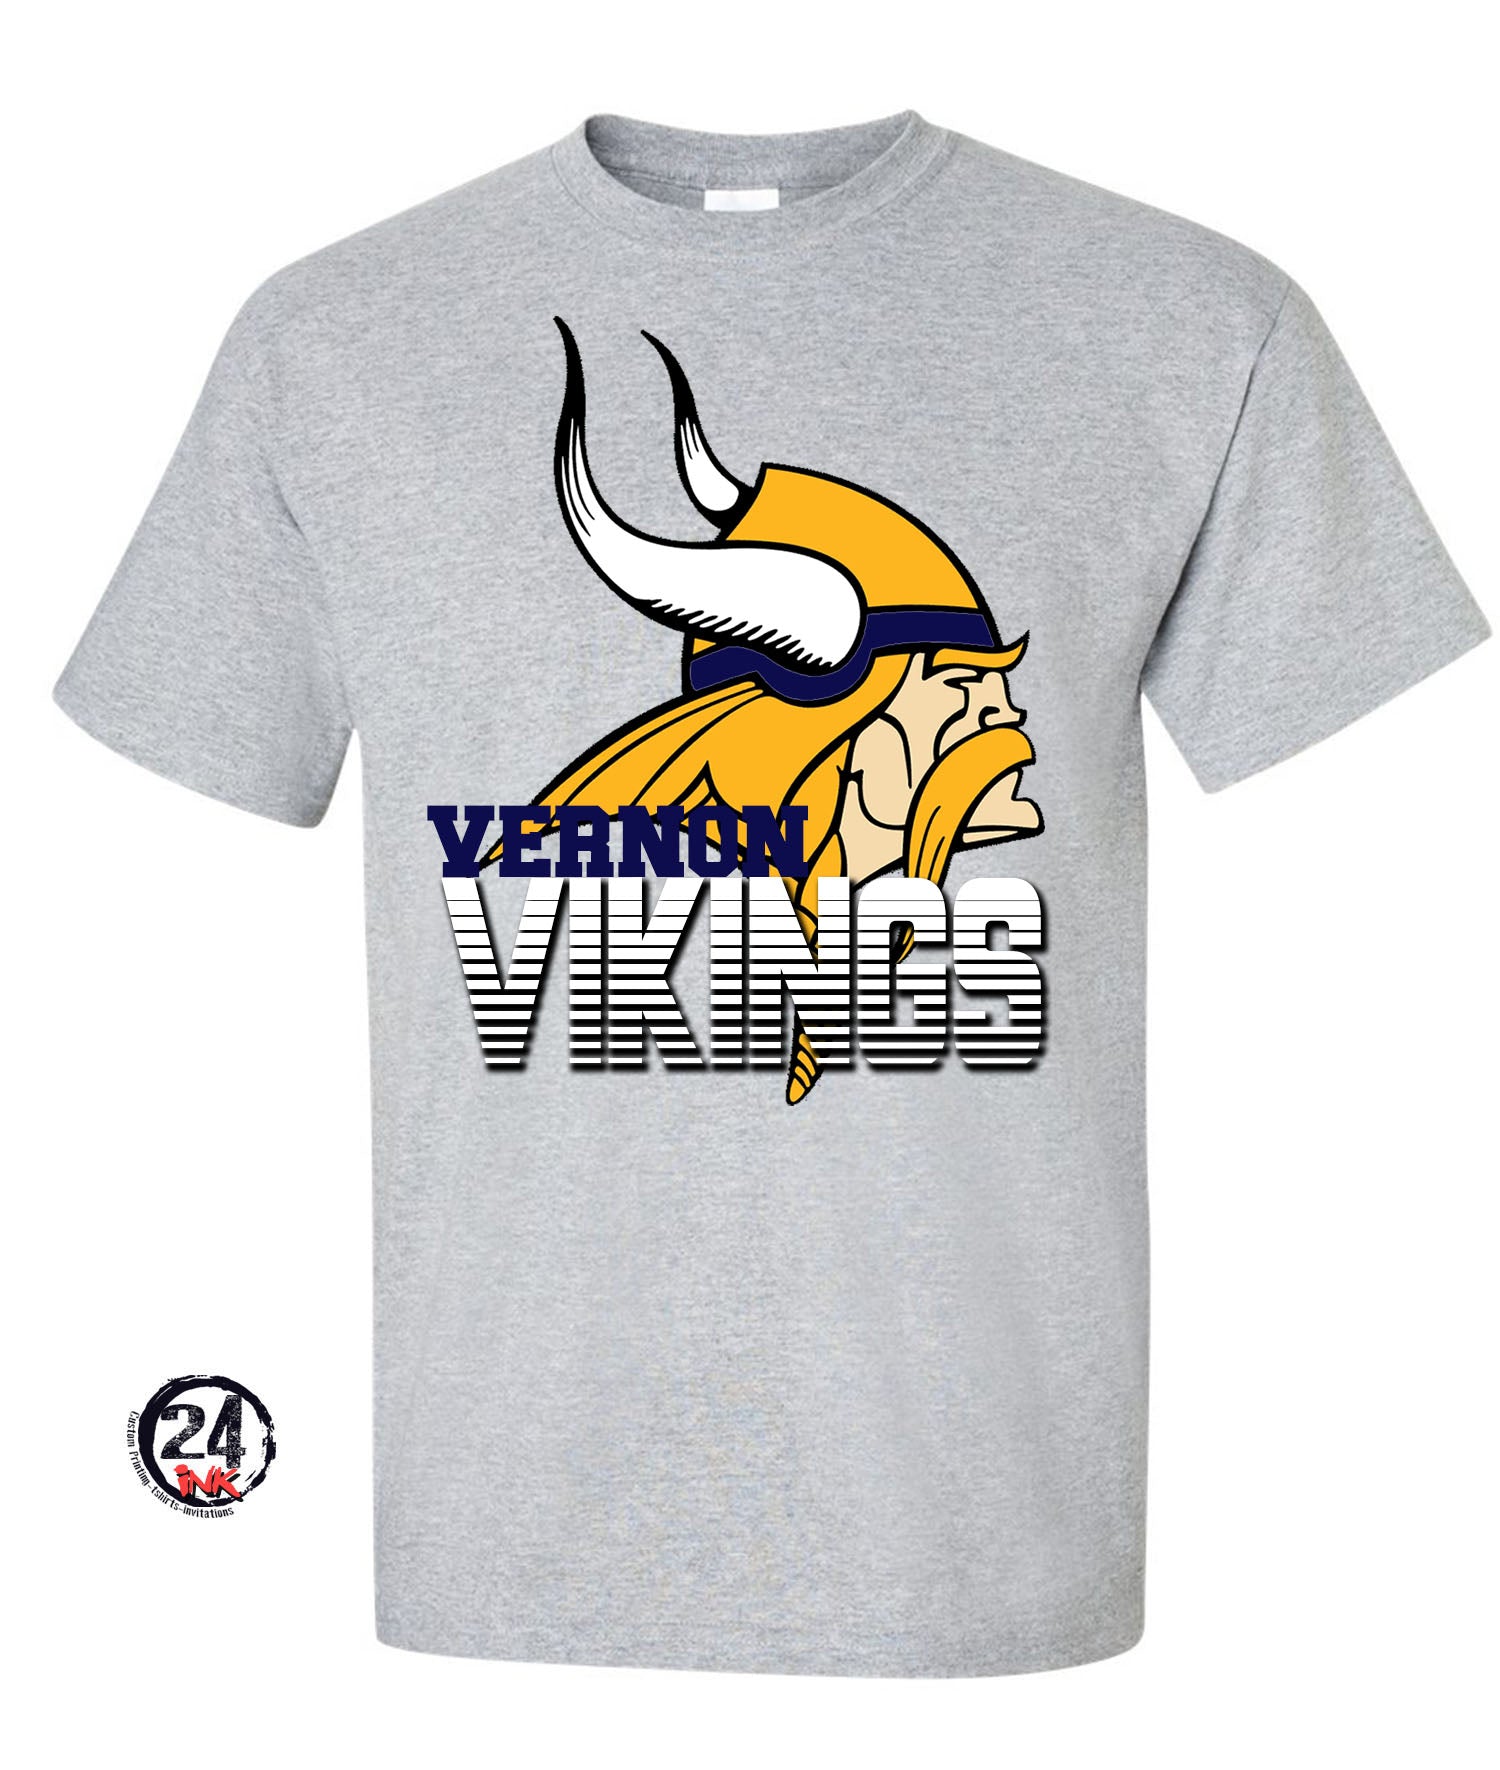 Vernon Vikings, Viking Head T-Shirt